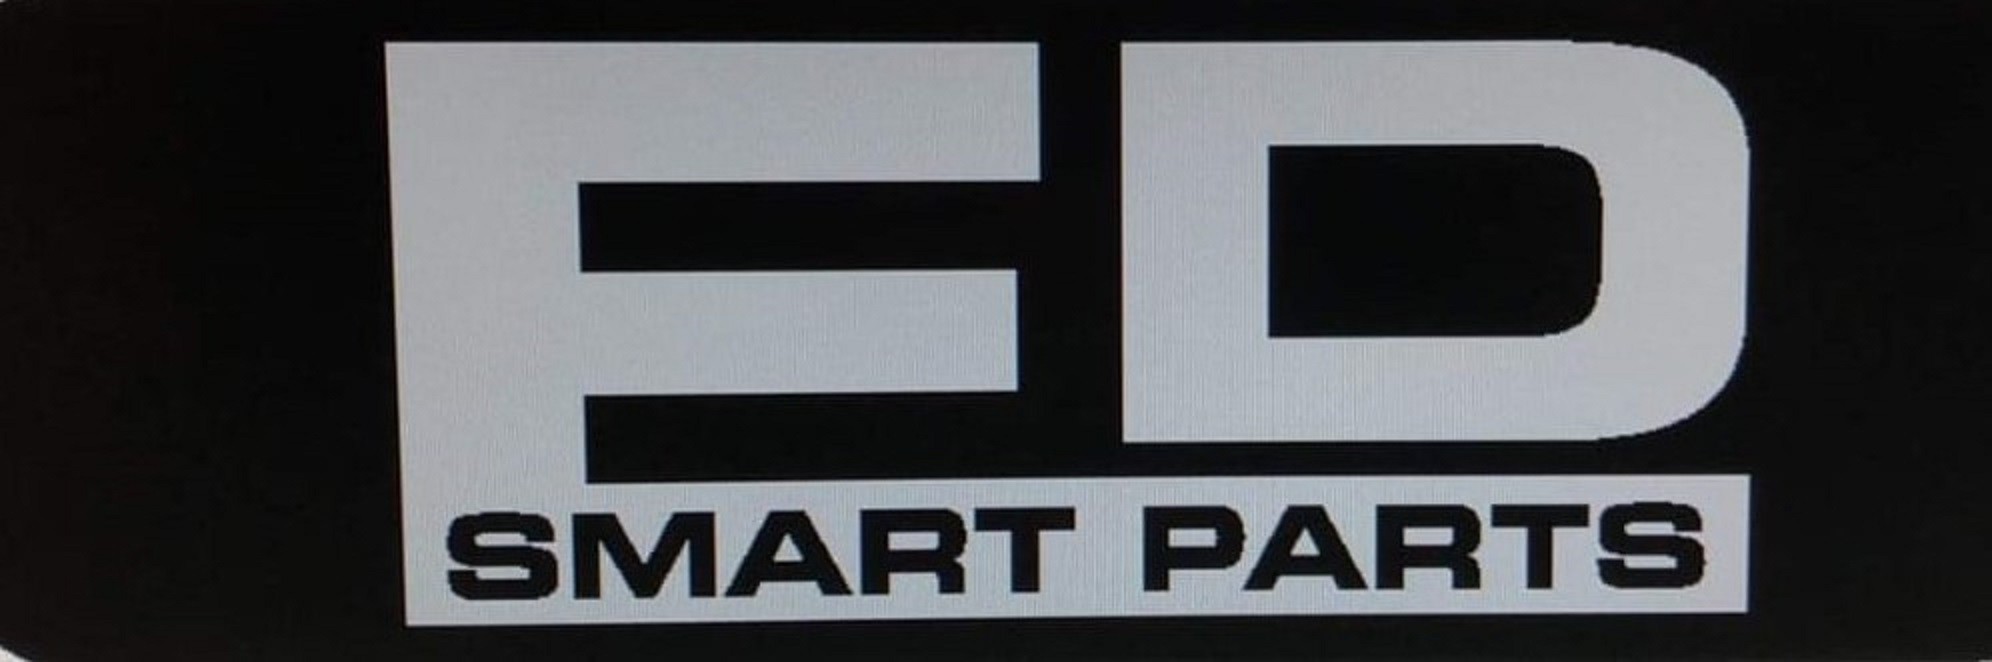 Ed Smart Parts